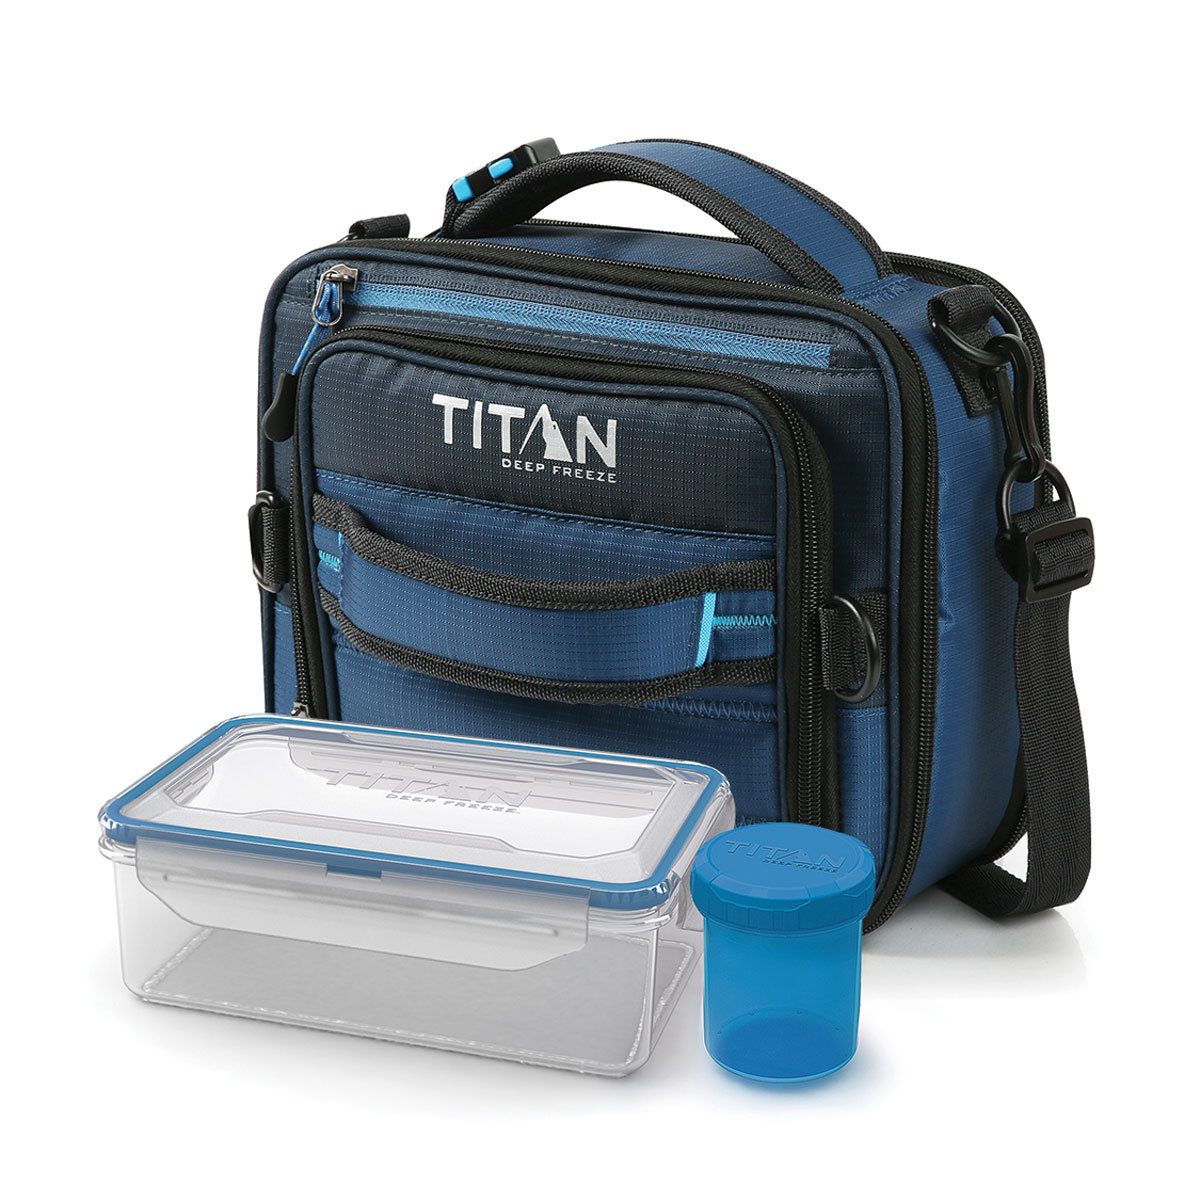 Titan Cooler in blue